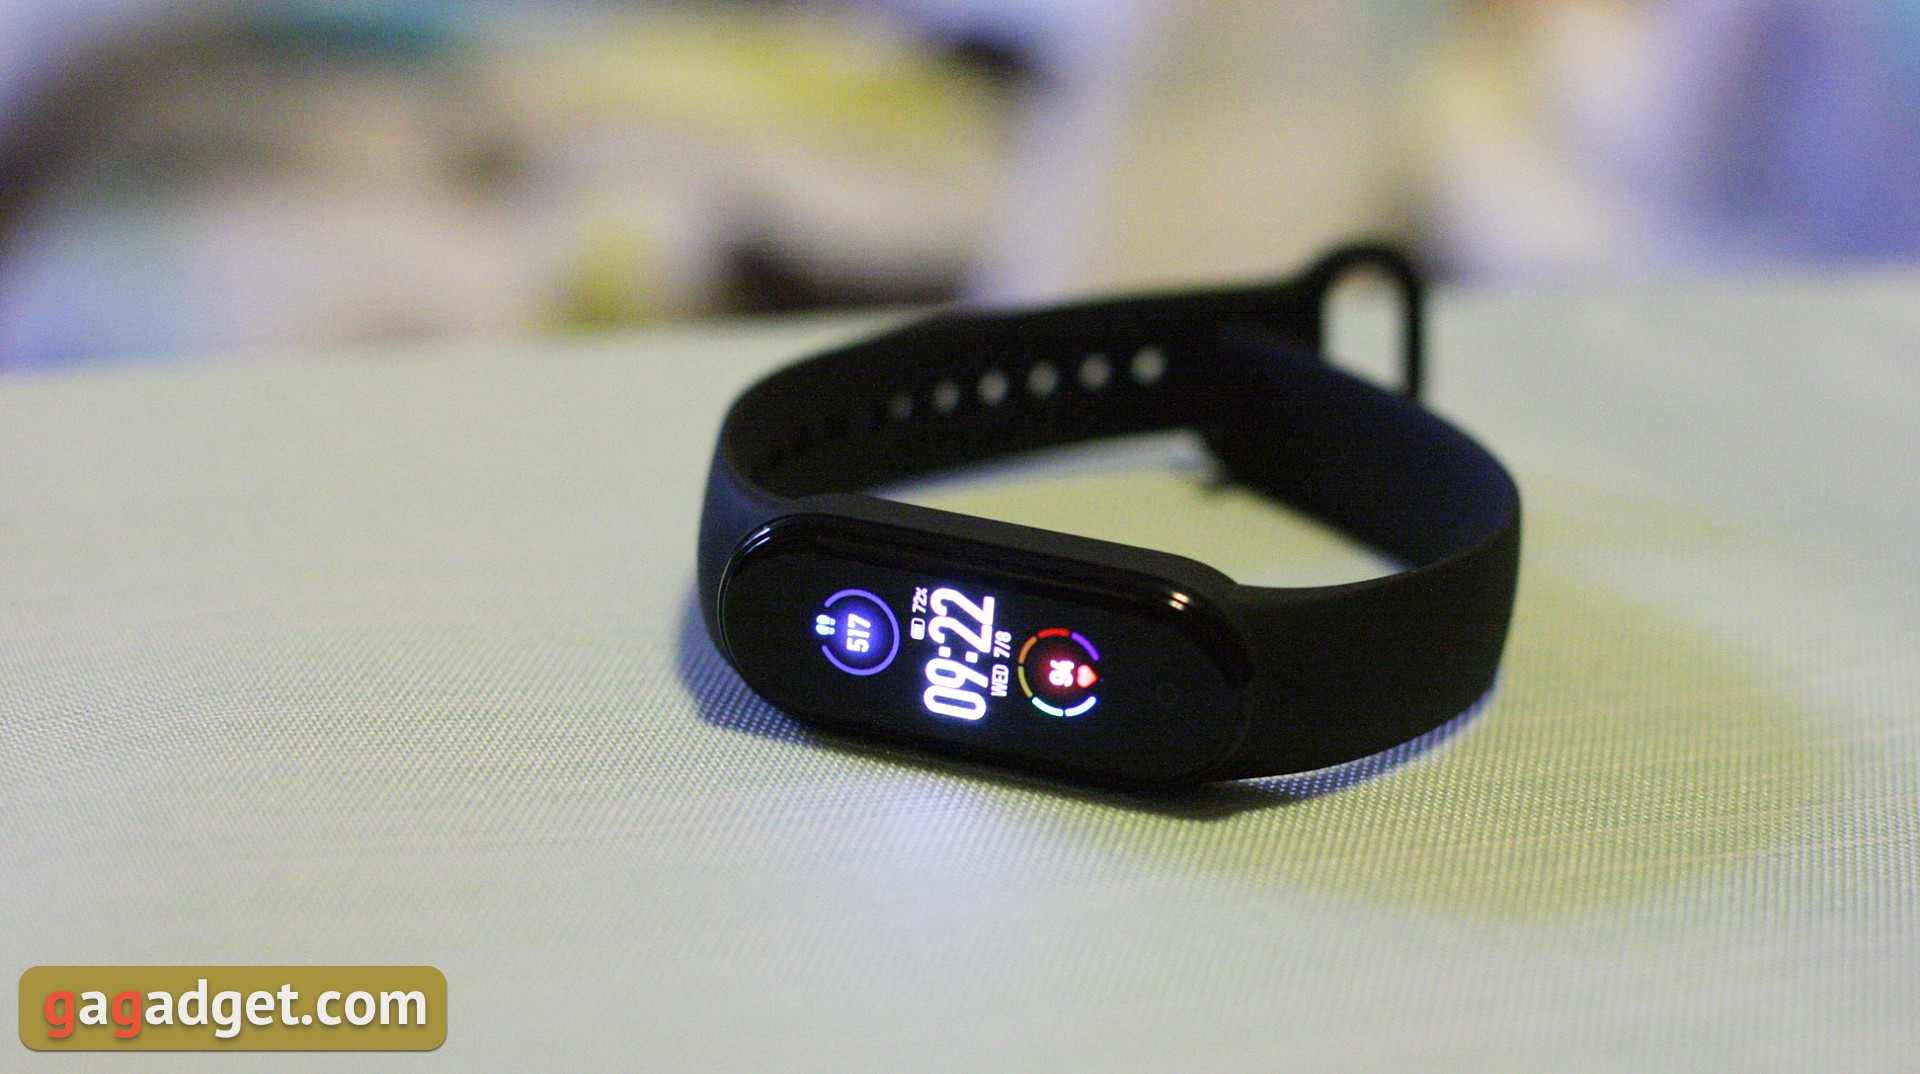  Xiaomi Mi Band 5 Smart Wristband 1.1 inch Color Screen